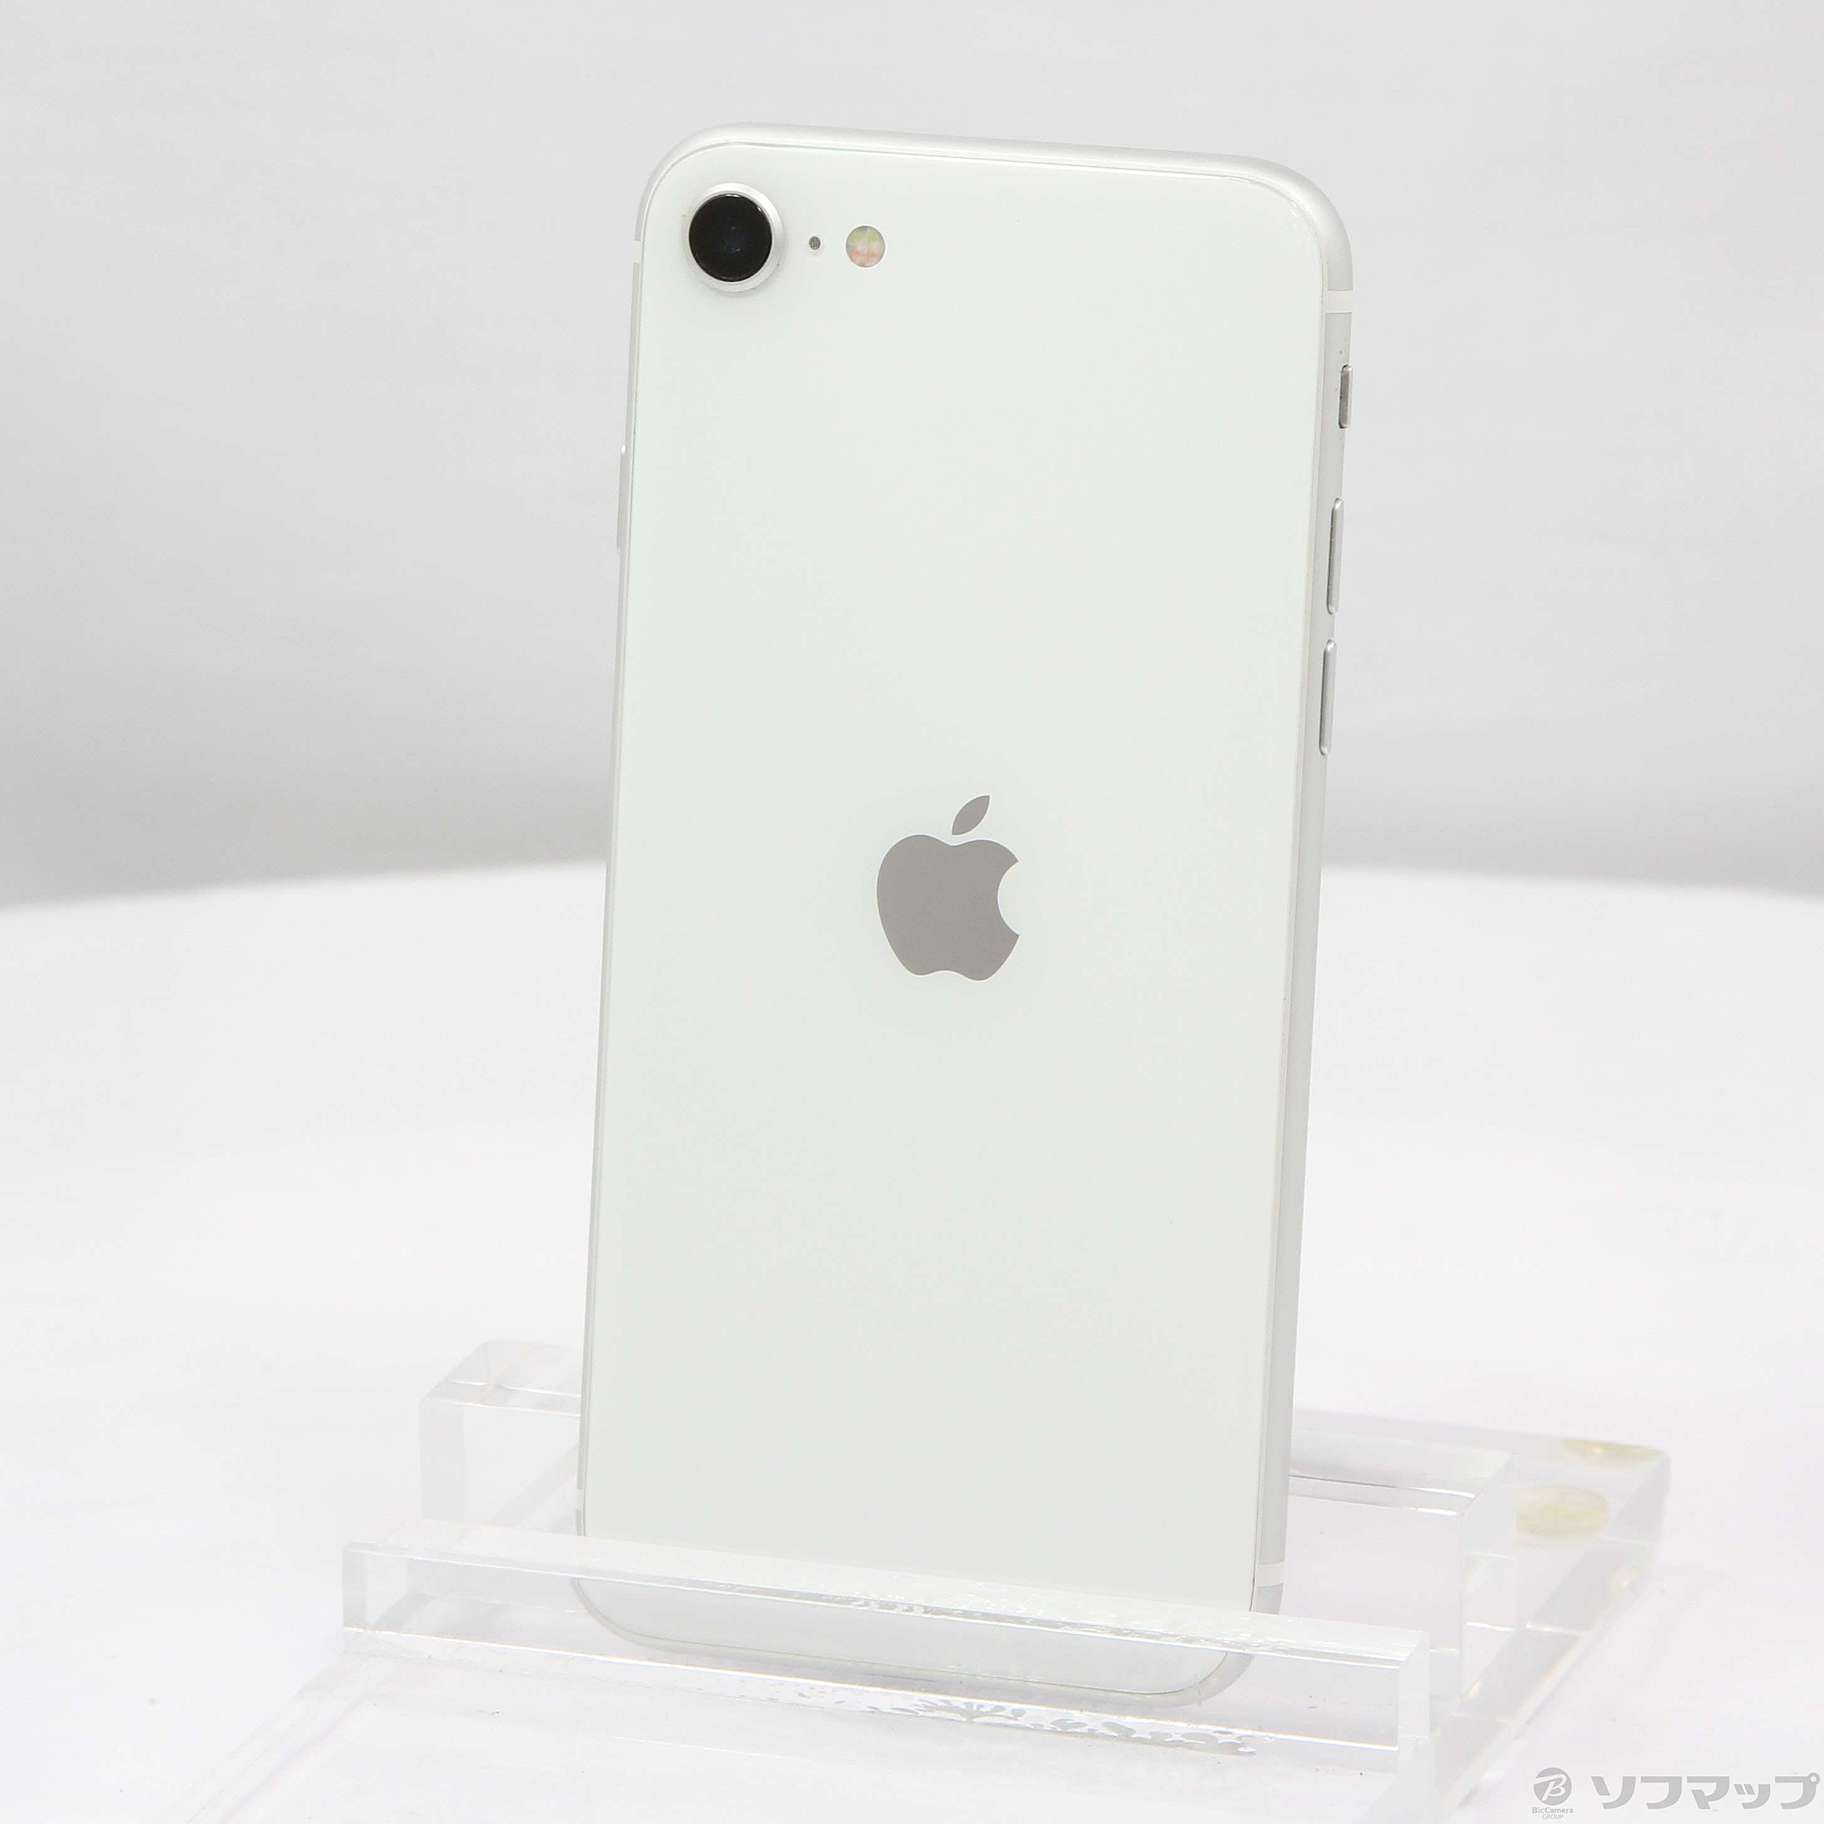 iPhone SE 第2世代 (SE2) ホワイト 128 GB SIMフリー - スマートフォン本体